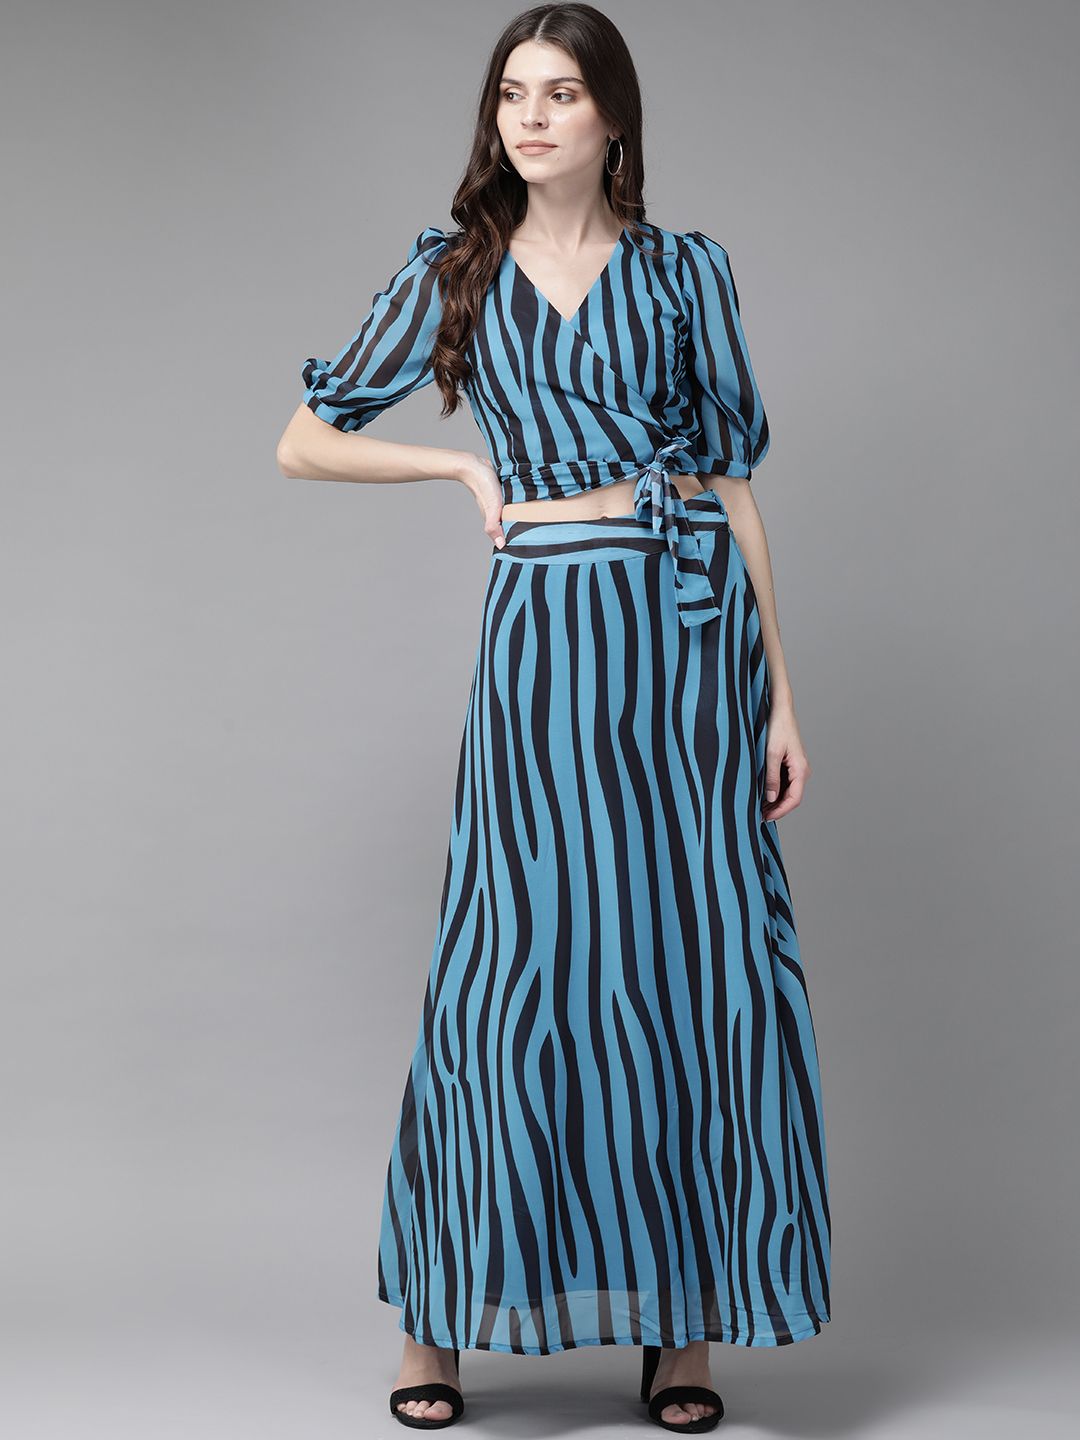 AKS Blue & Black Zebra Print Crop Top with Skirt Price in India